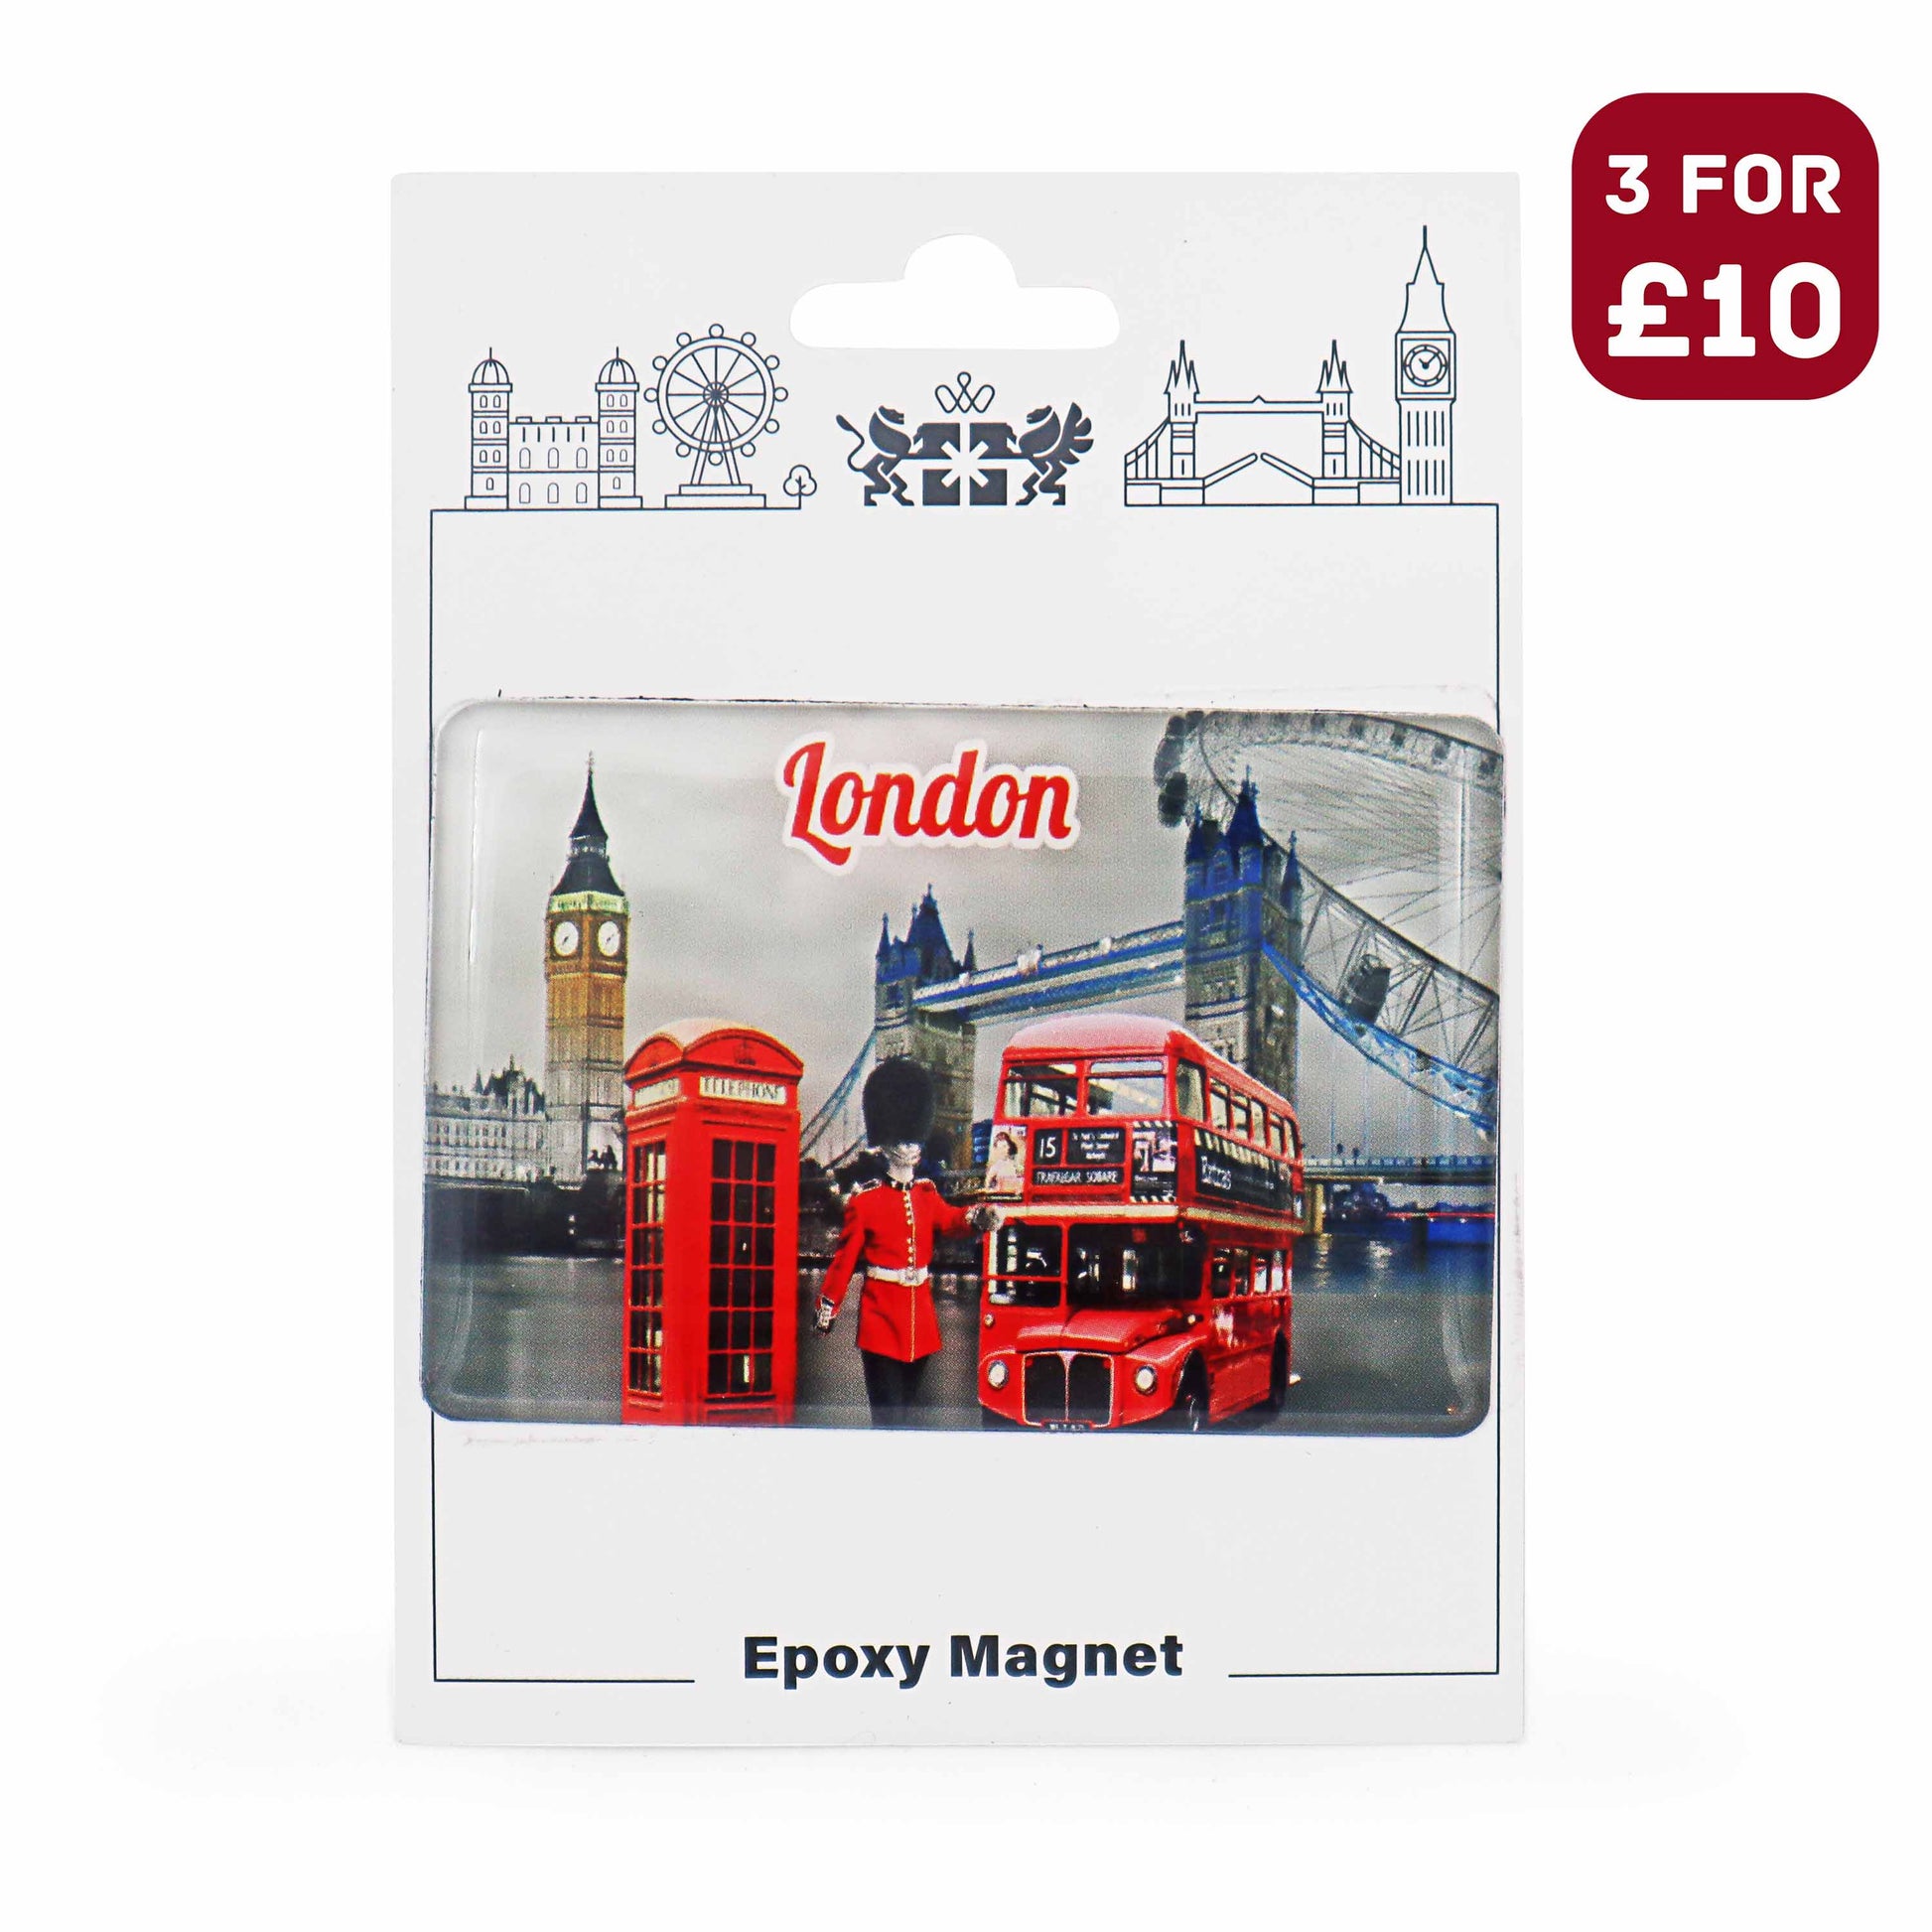 London Souvenir Epoxy Magnet - Design 4 - Big Ben, Red Bus